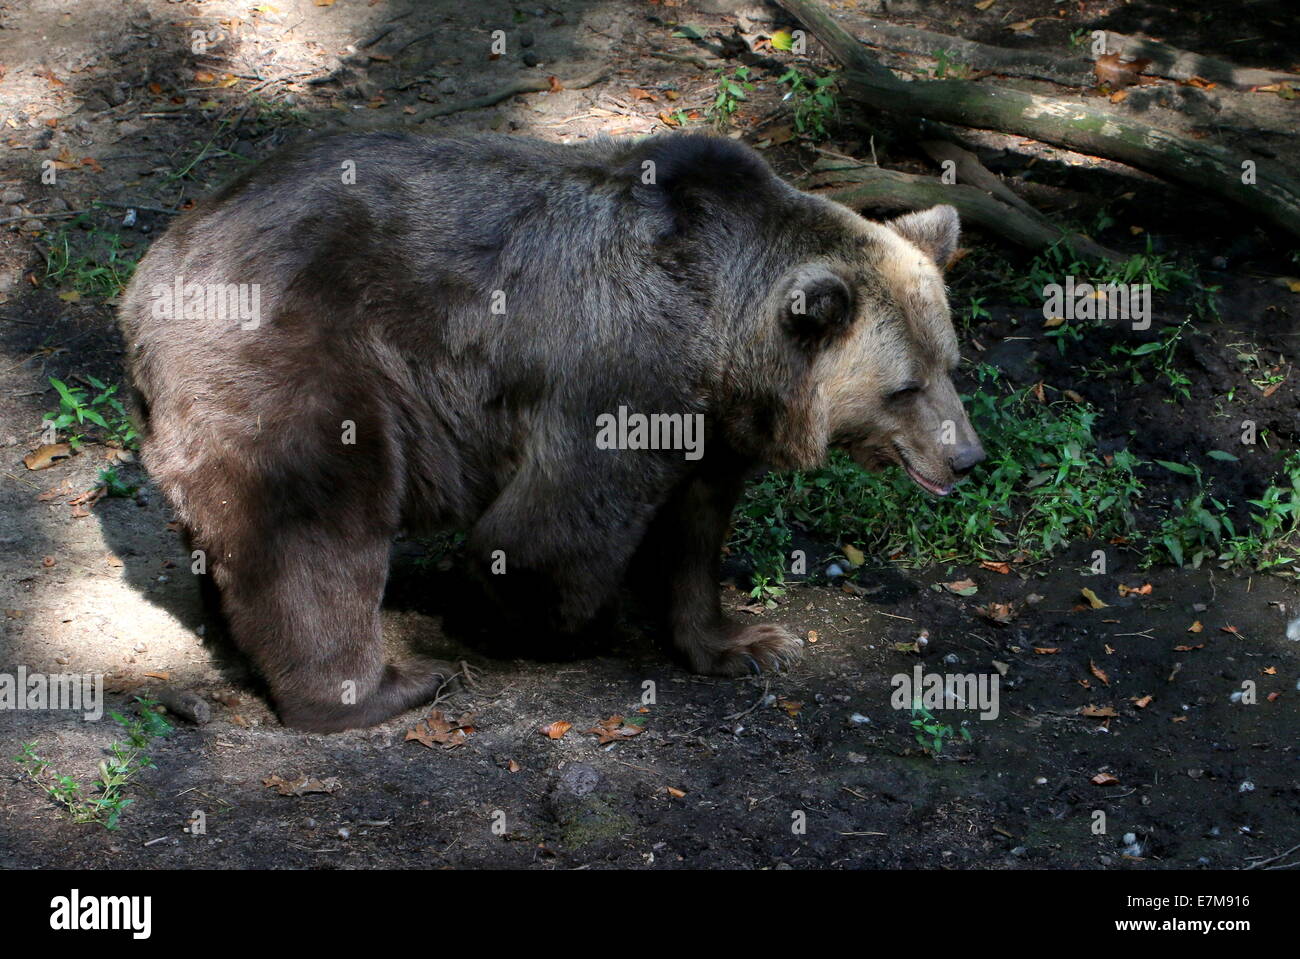 European brown bear (Ursus arctos arctos) in a natural forest setting Stock Photo